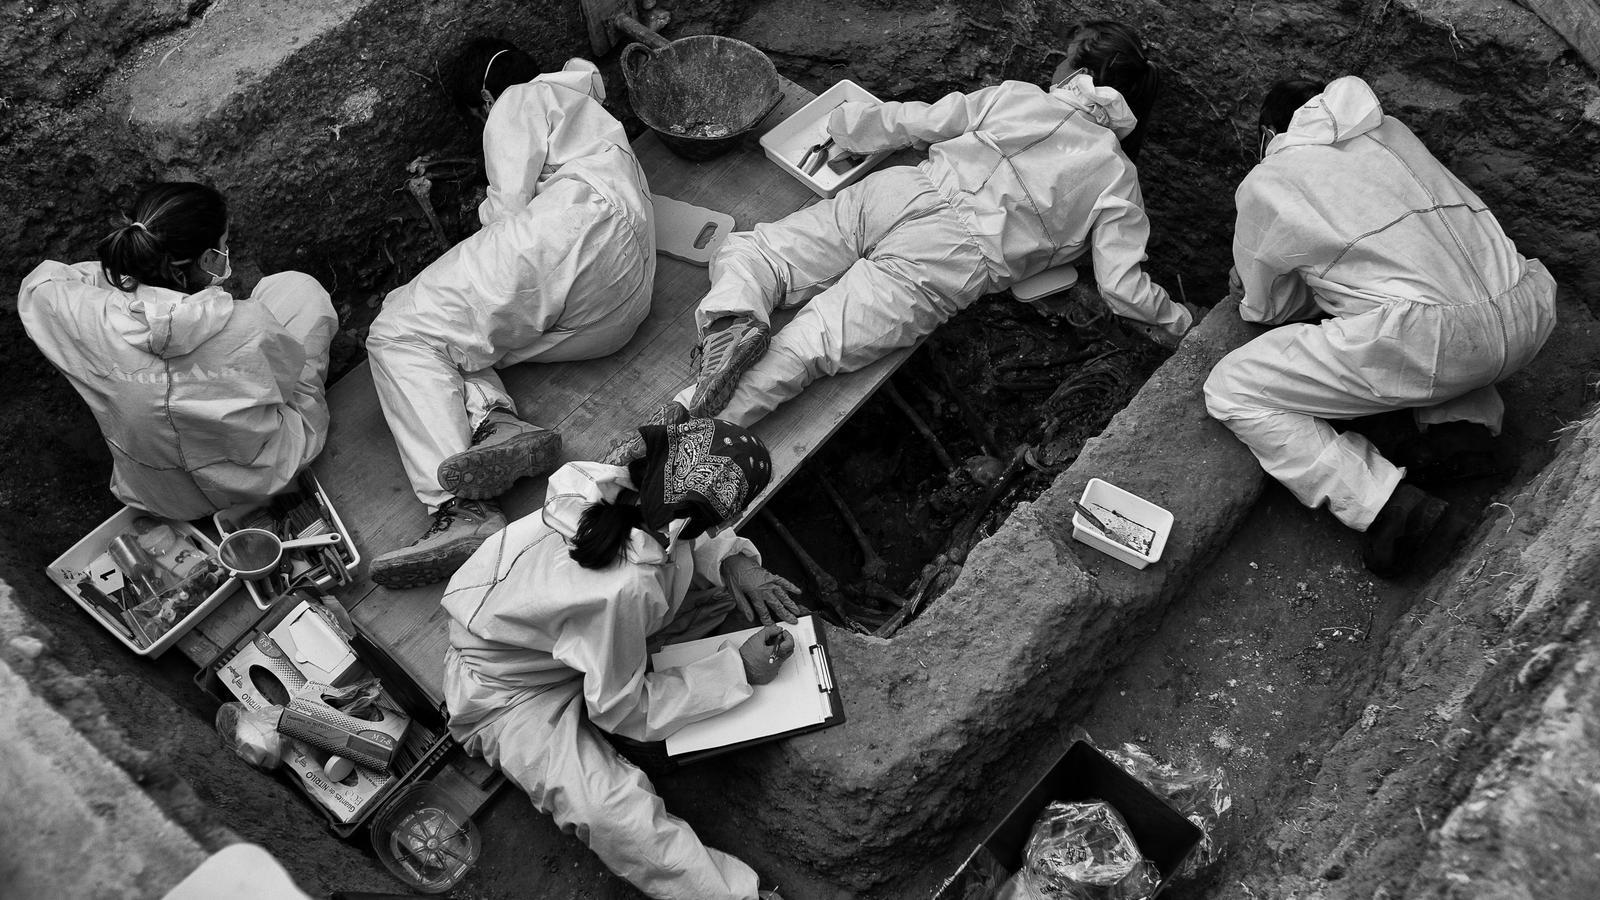 Un equip d’arqueòlegs i antropòlegs de l’associació científica ArqueoAntro exhumant una fossa comuna del cementiri de Paterna.